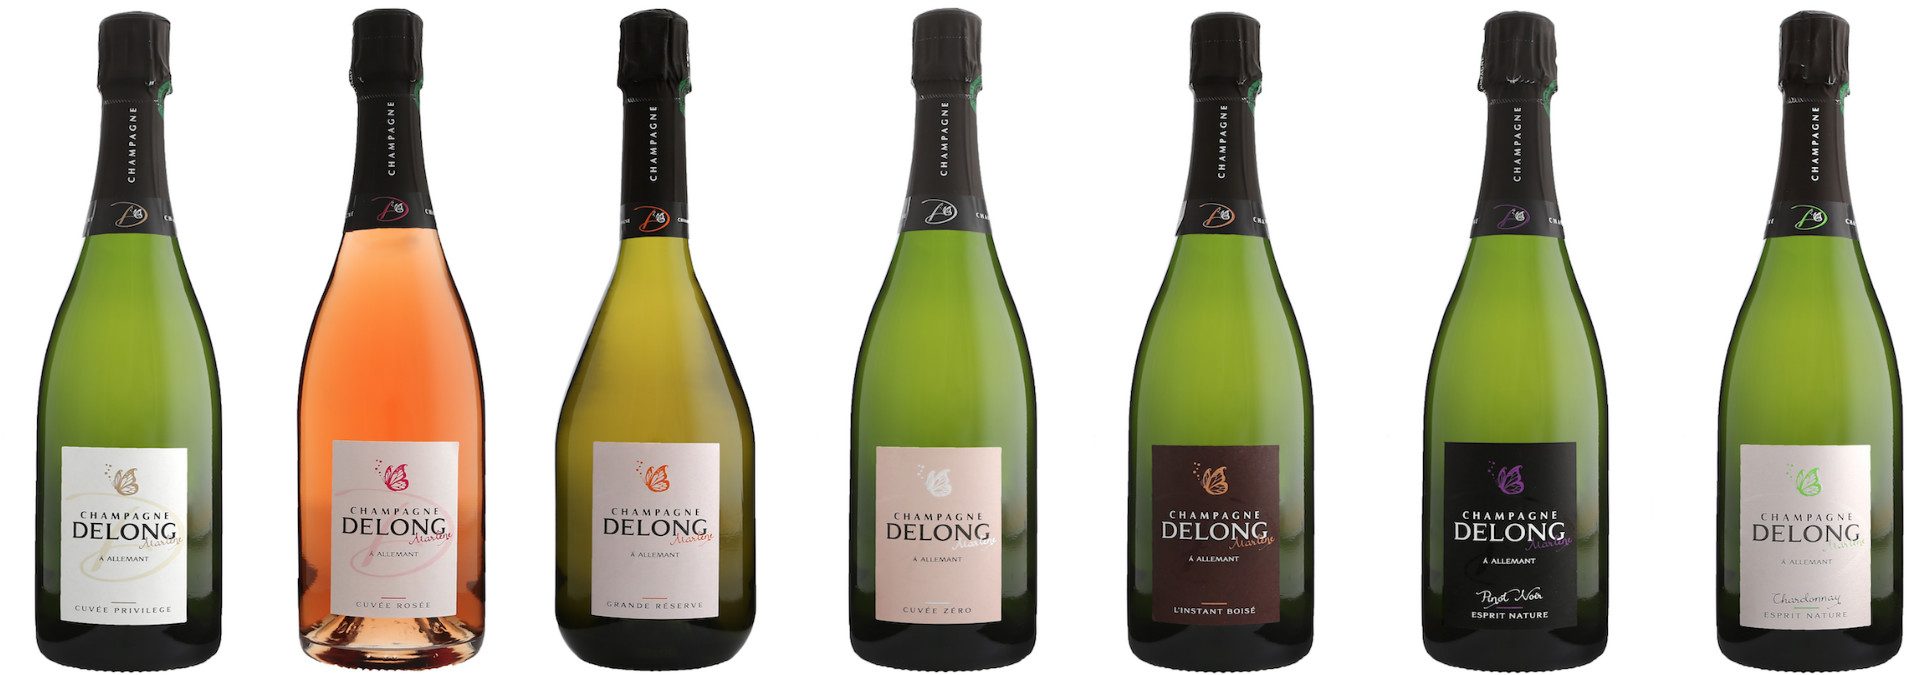 Champagne Delong Marlène